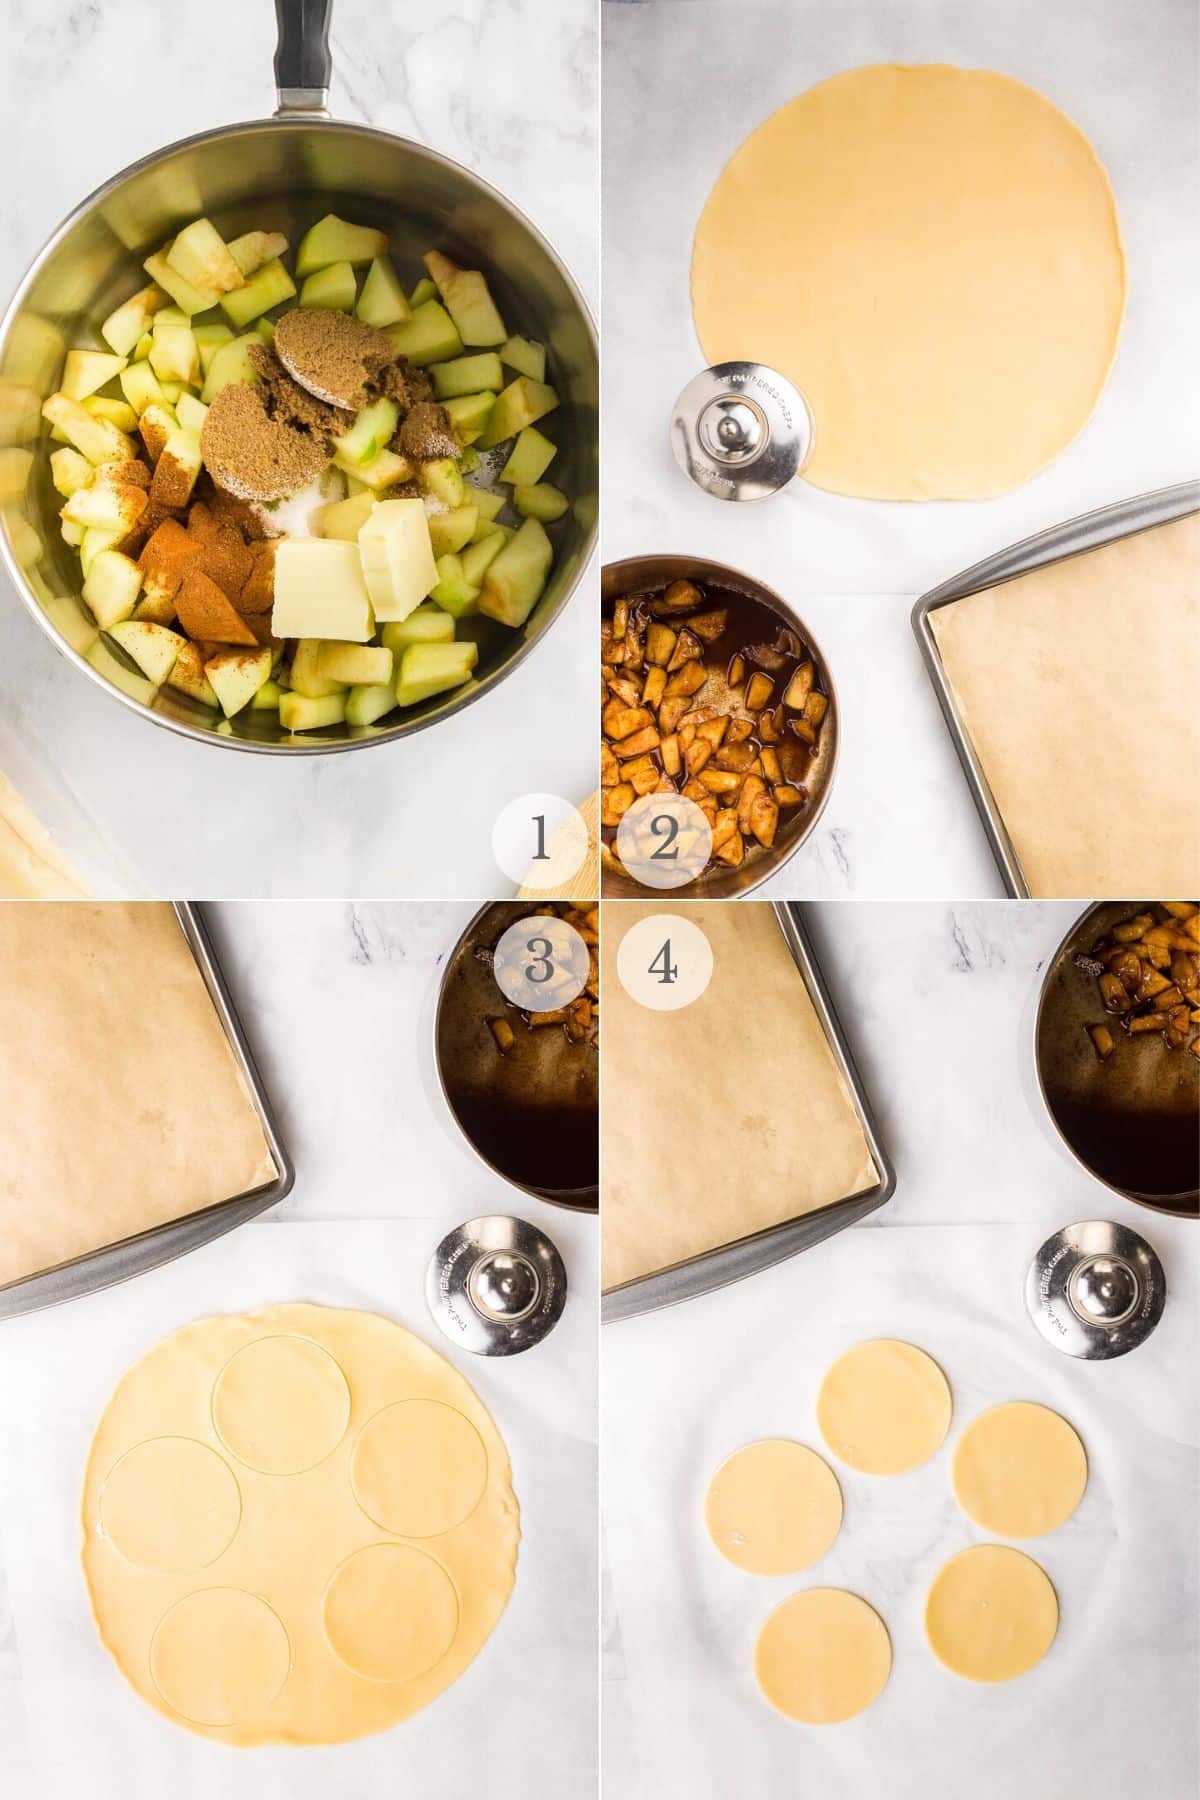 apple hand pies recipe steps 1-4.